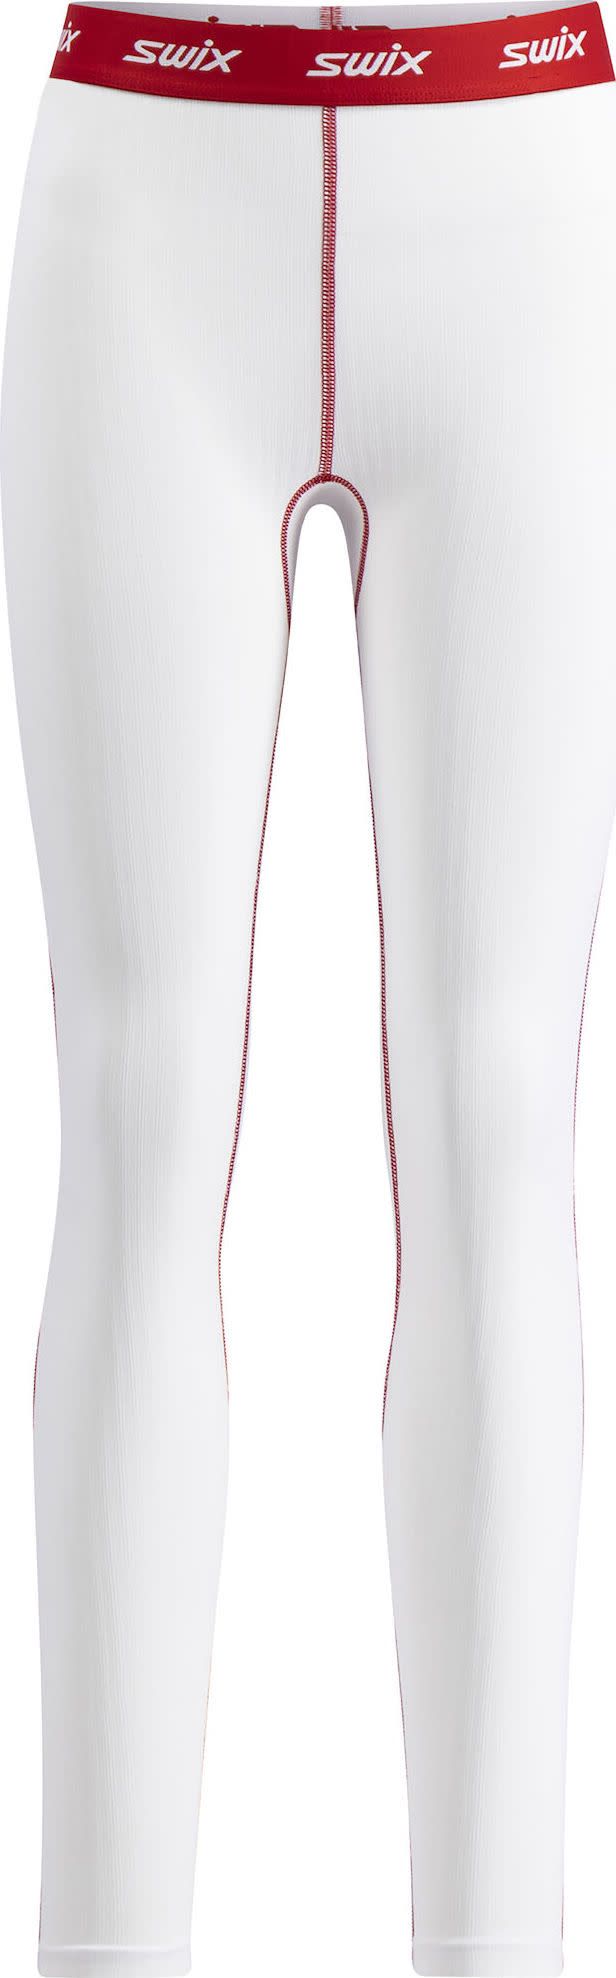 Women's RaceX Classic Pants Bright White/Swix Red